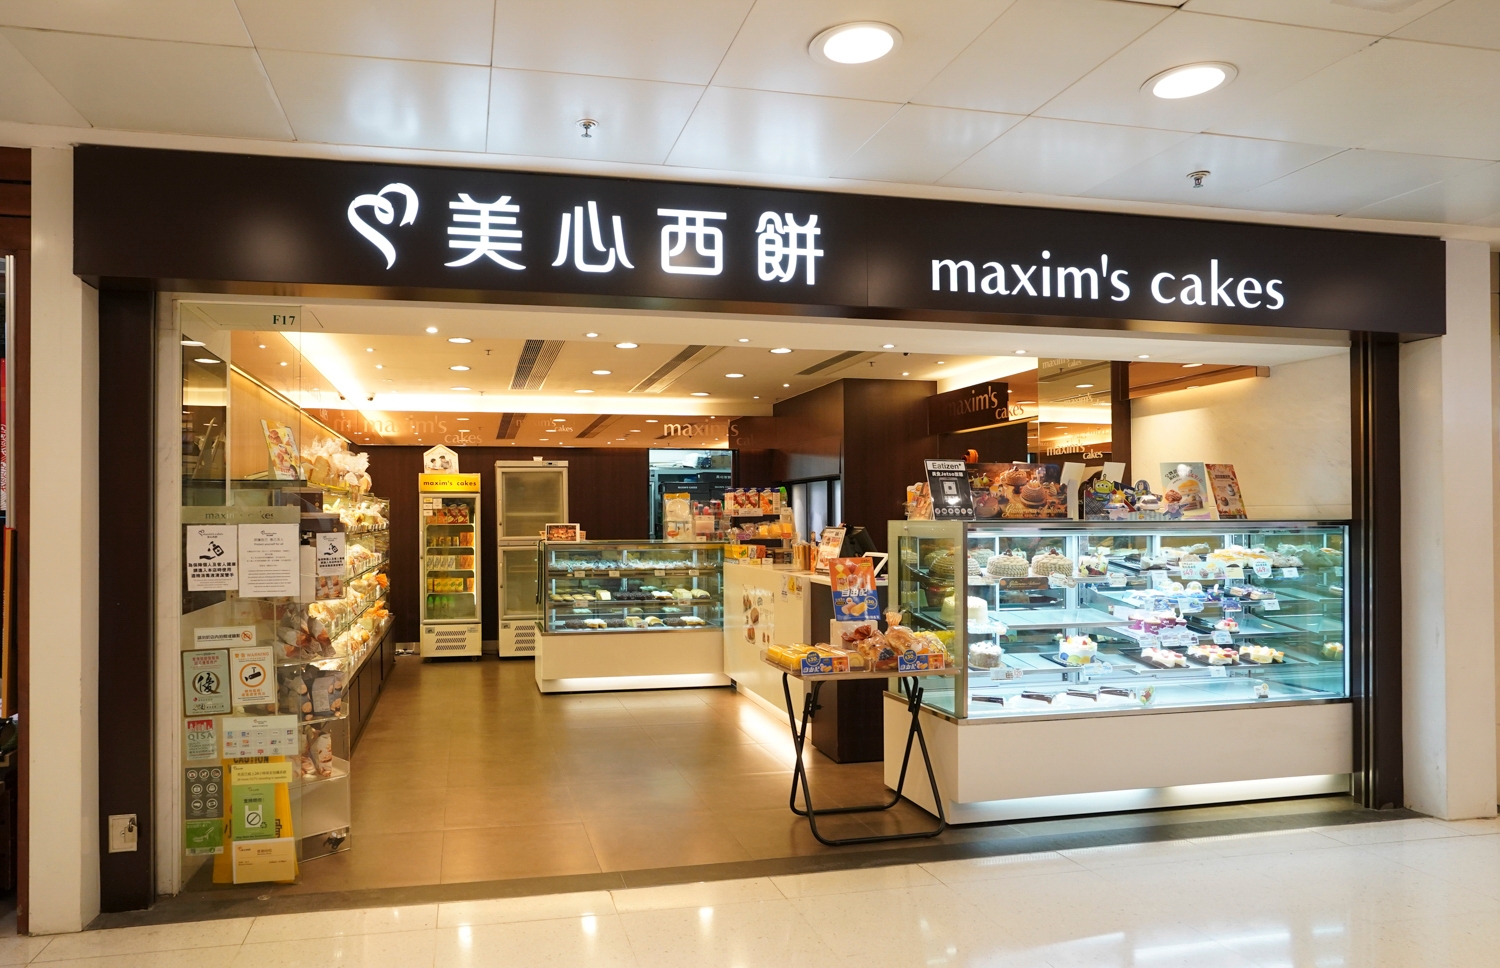 Harga Promo HK$88 Souffle Cheesecake Di Maxim's Cake Hong Kong -  OrangHongkong.com